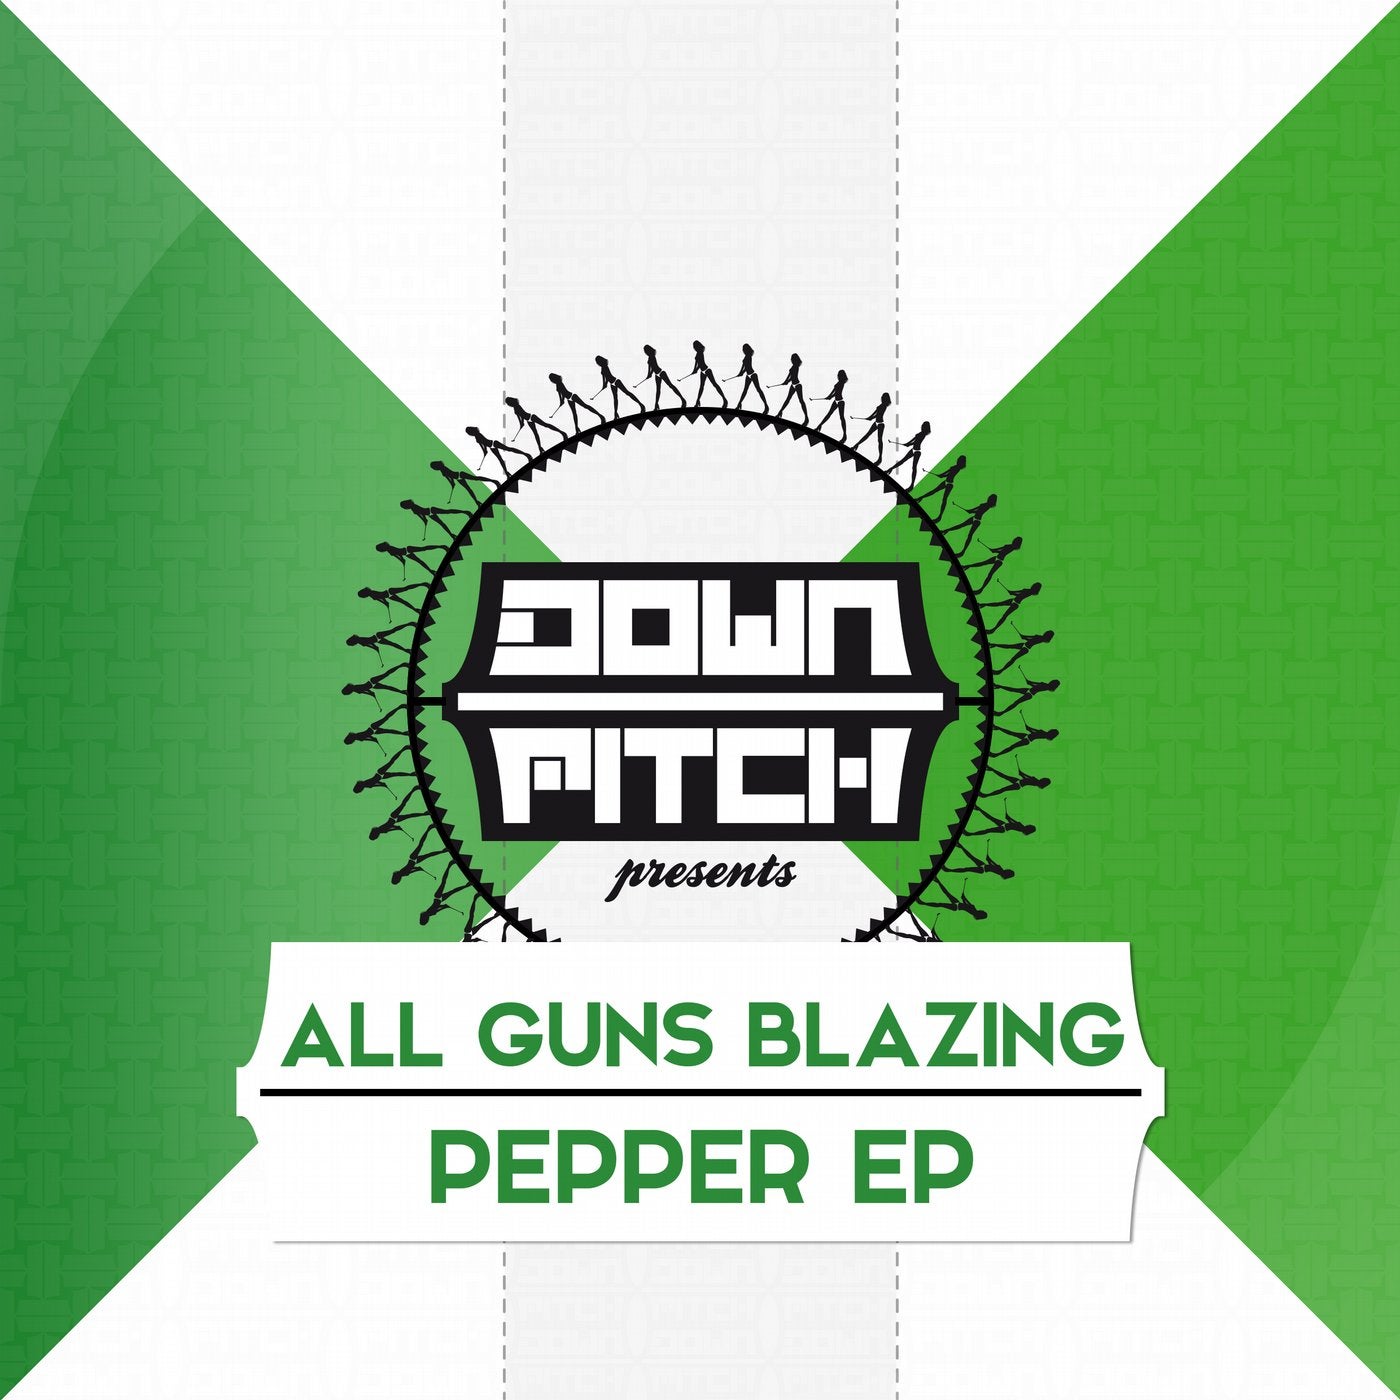 Pepper EP